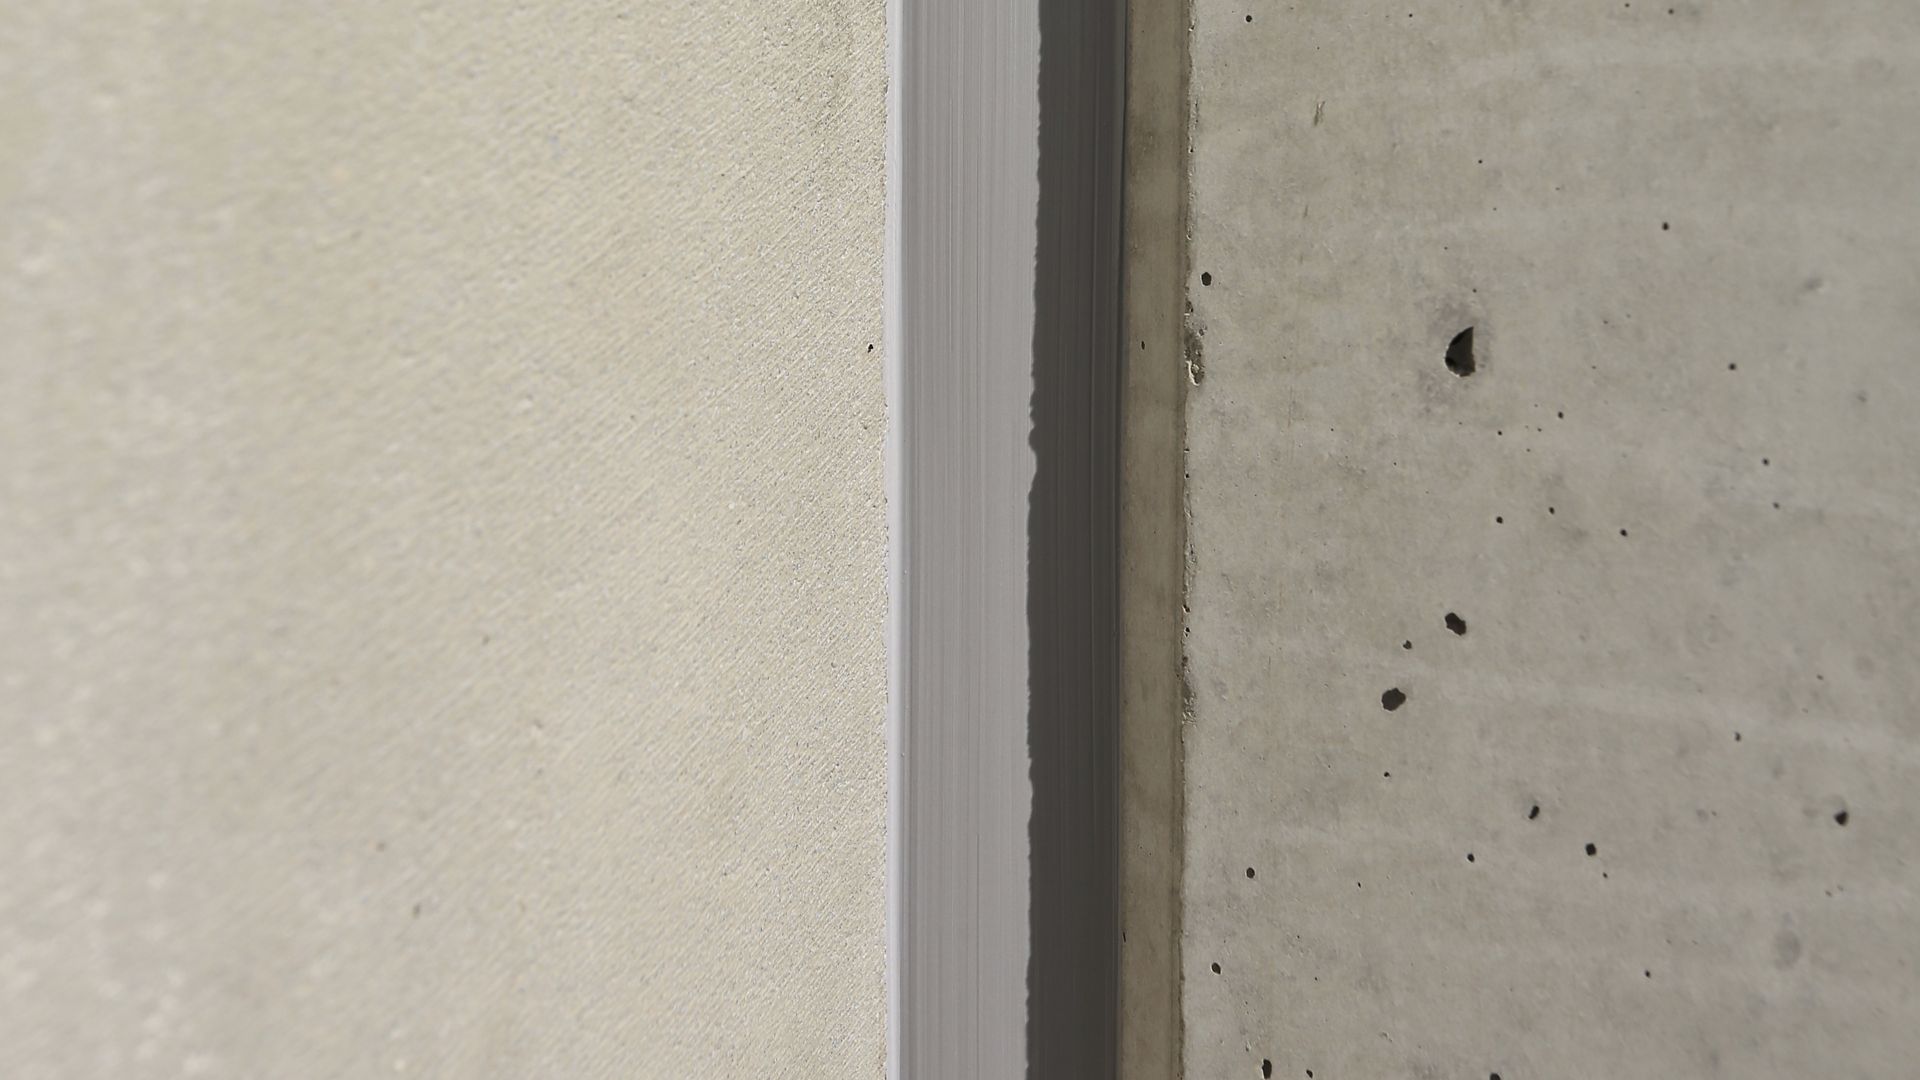 Concrete joint sealing